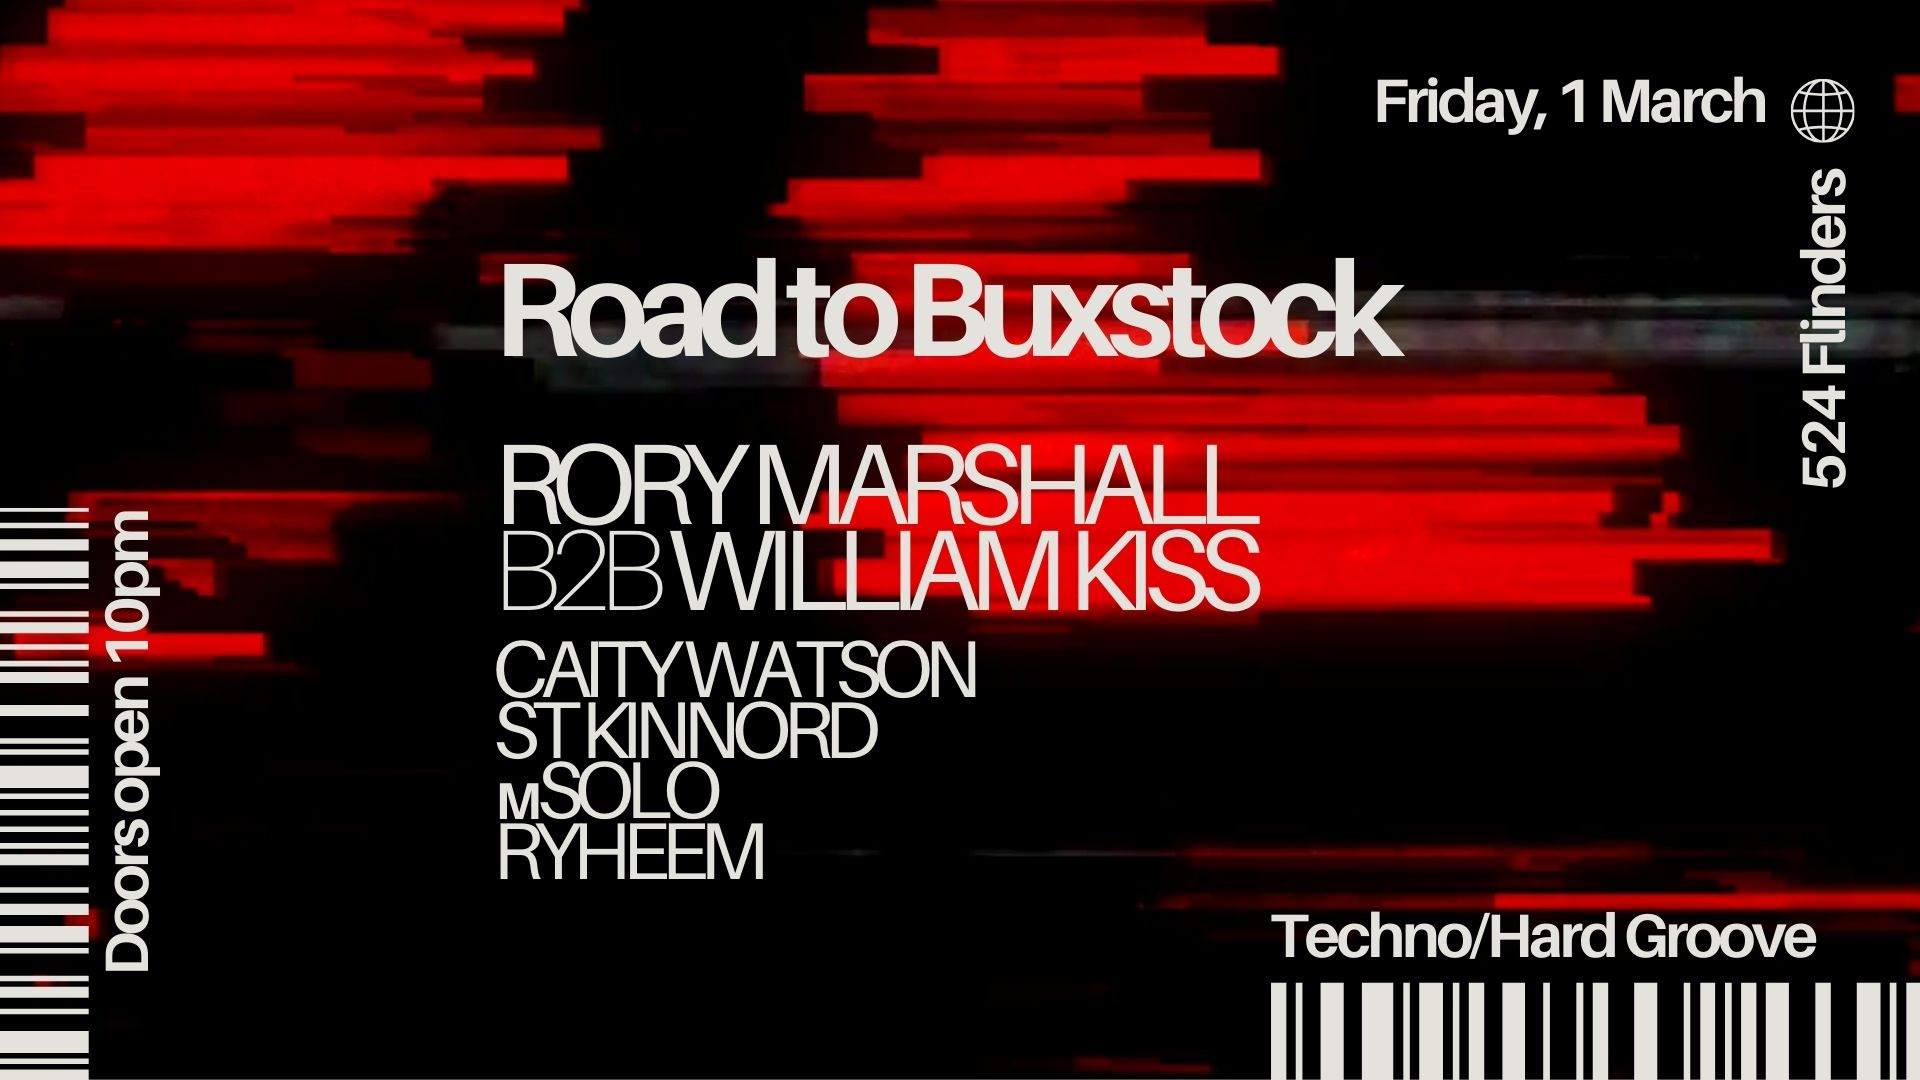 Road to Buxstock - Rory Marshall B2B William Kiss - Página frontal